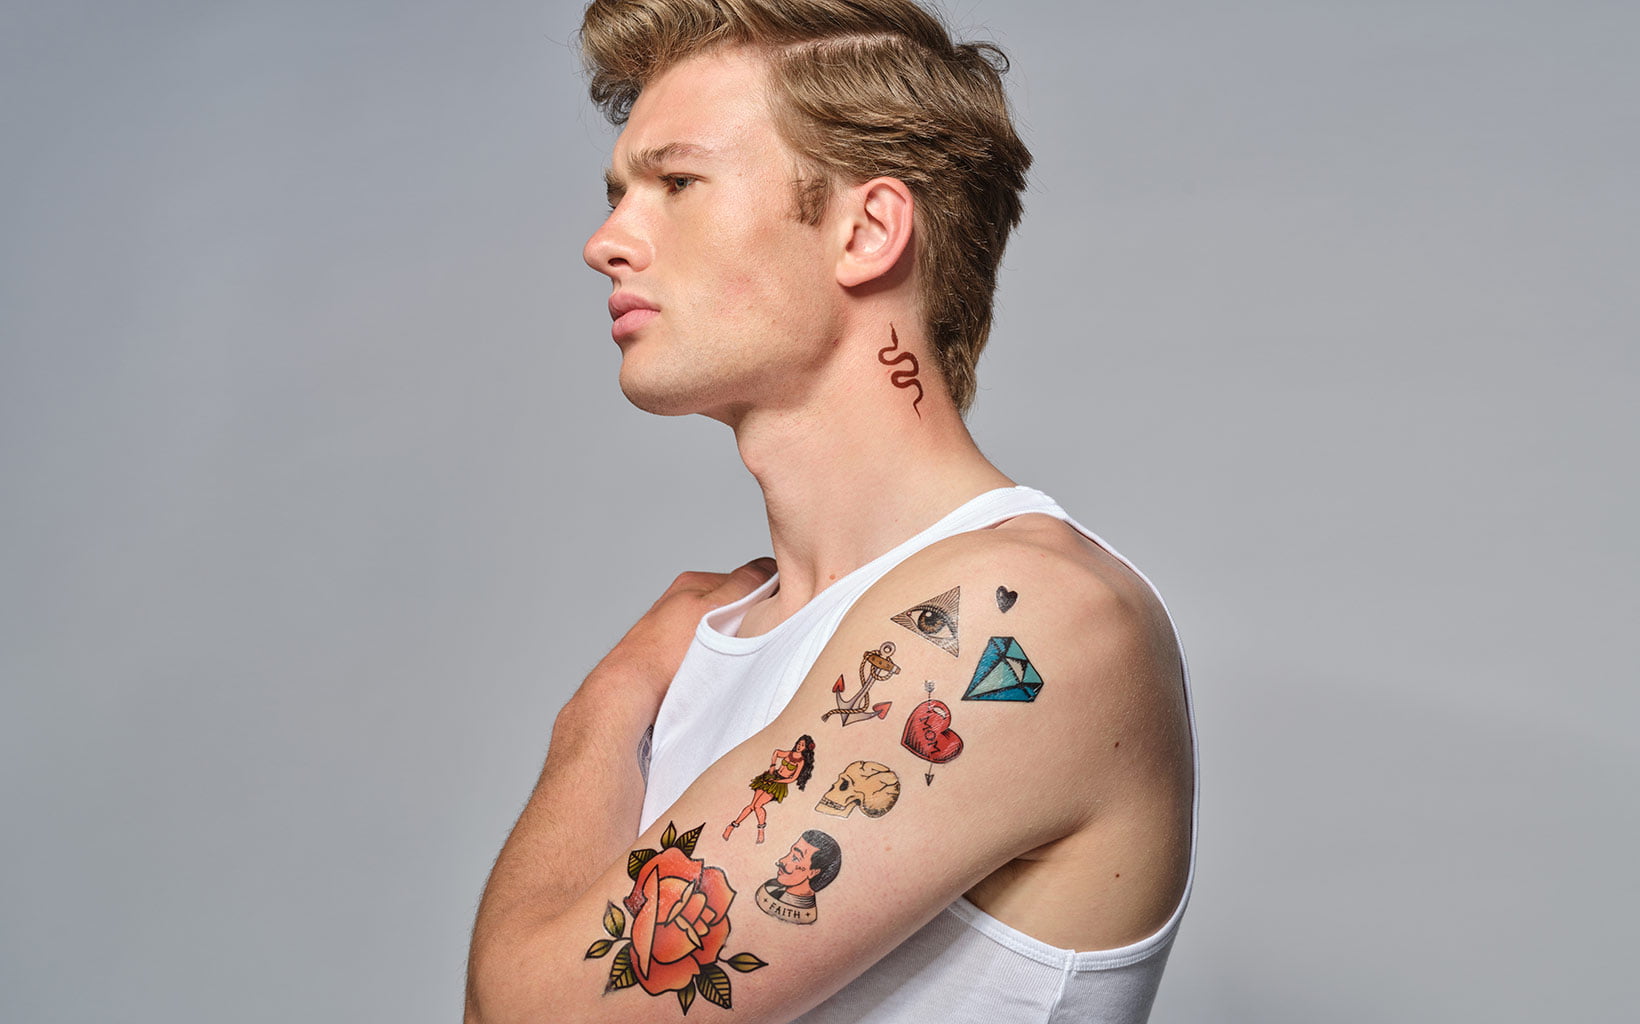 Entwerfe & verkaufe individuelle temporäre Tattoos